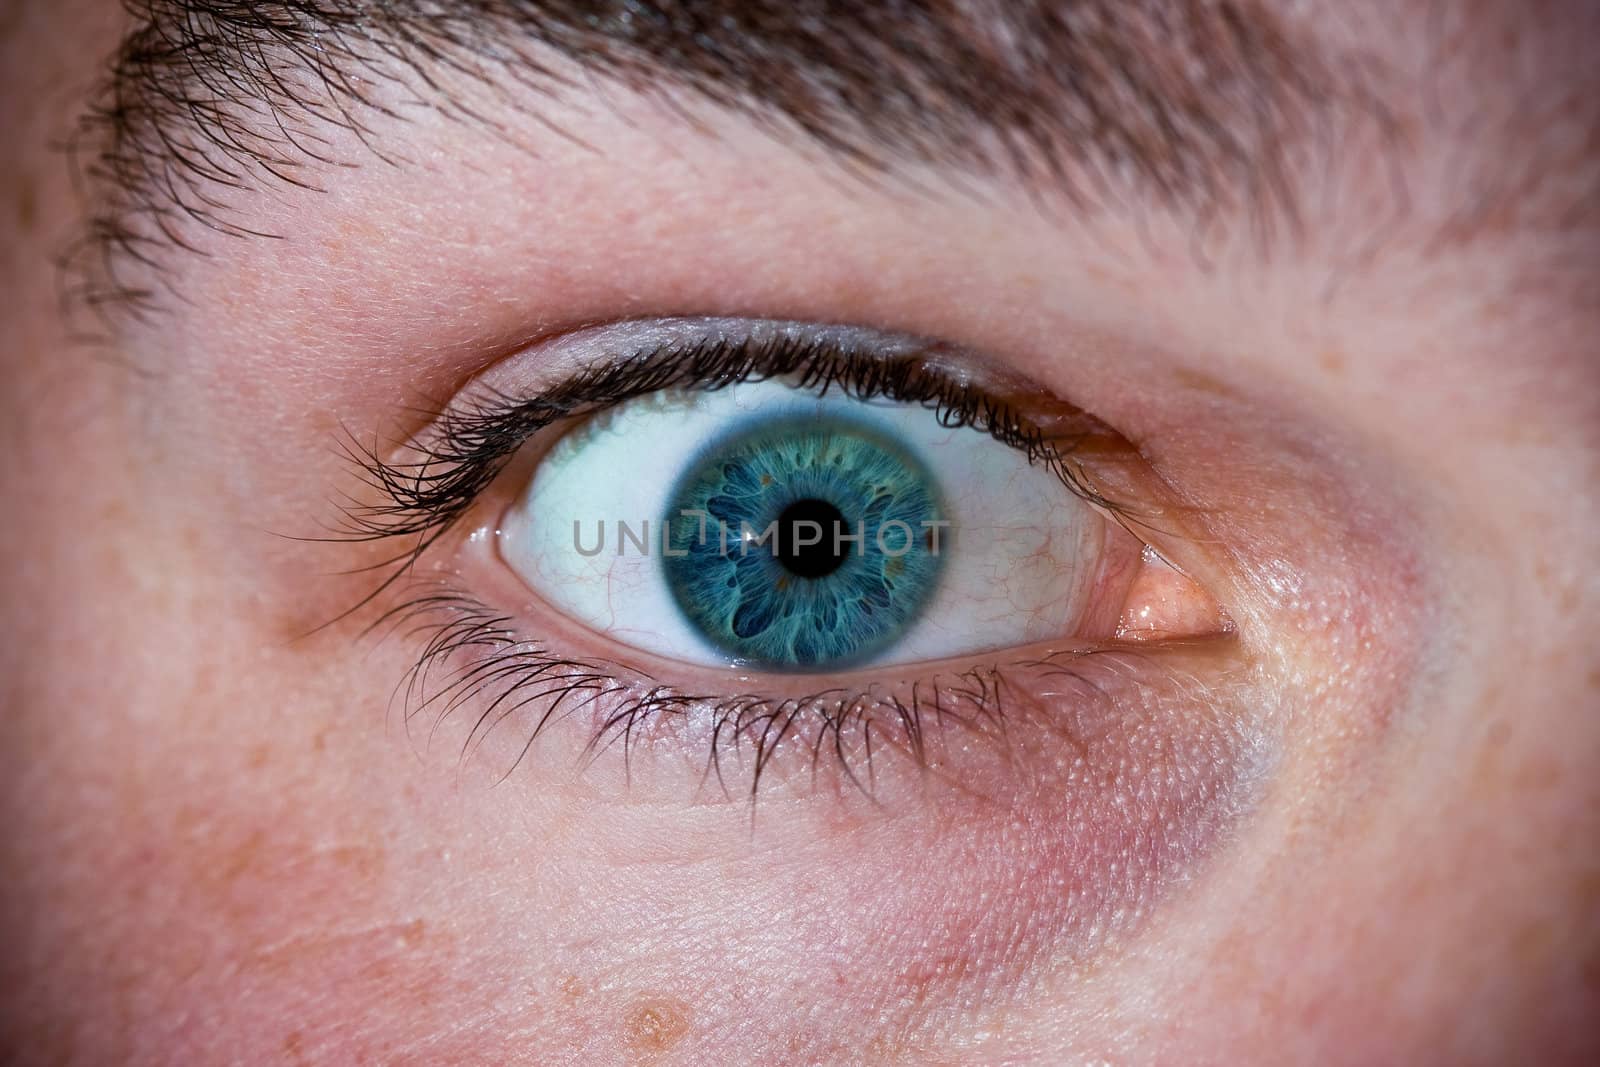 Macro close-up of a man's eye ball